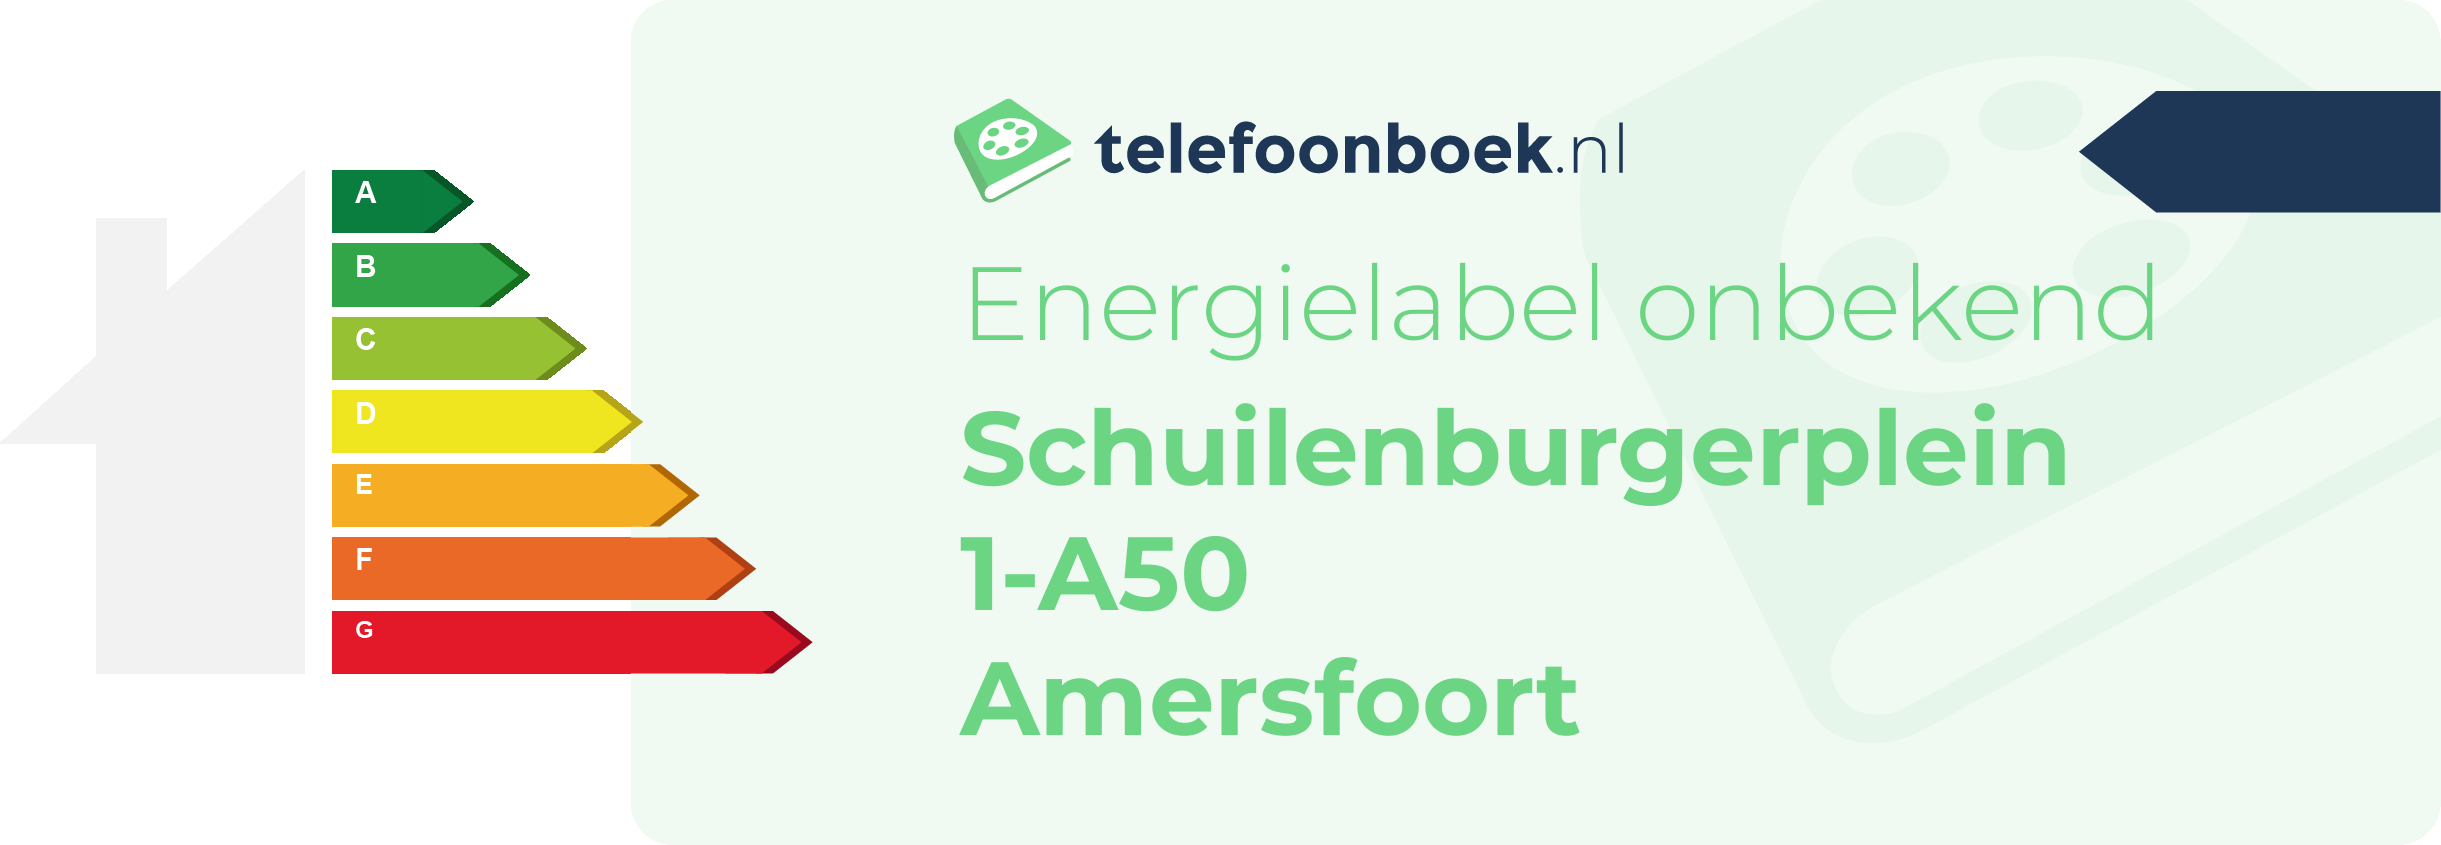 Energielabel Schuilenburgerplein 1-A50 Amersfoort